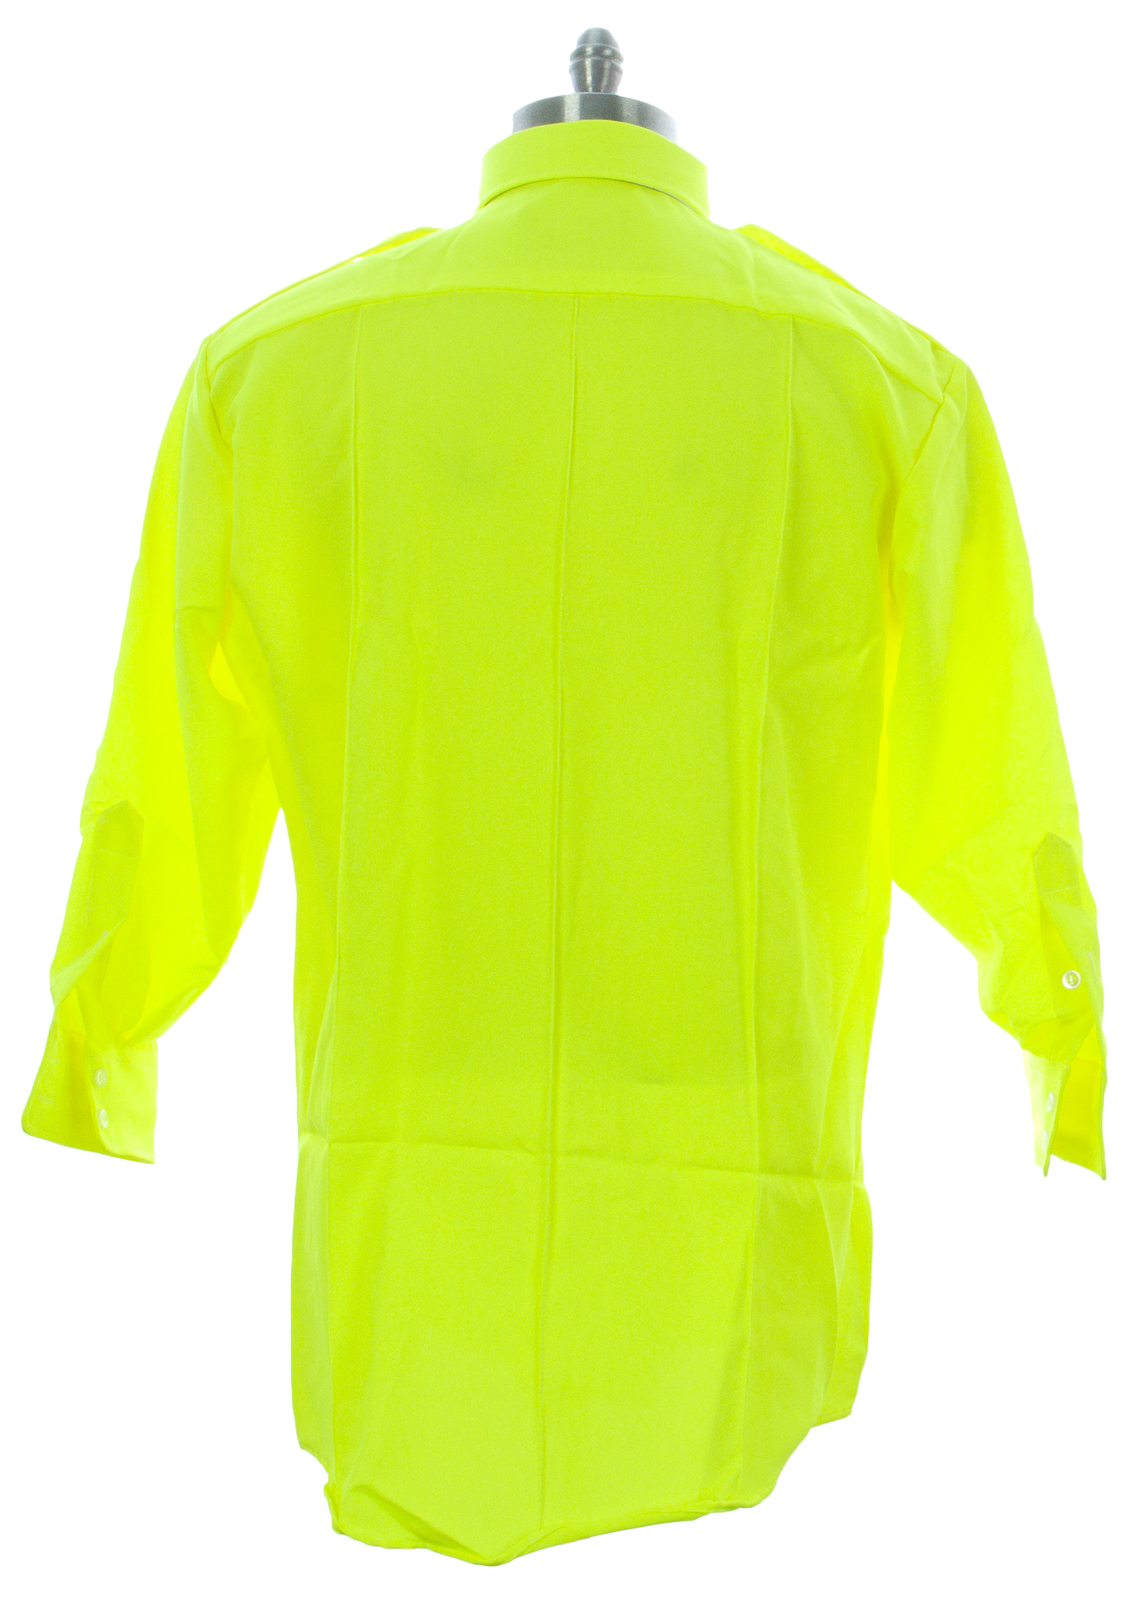 FLYING CROSS Men's Neon Green Uniform Shirt 35W7899G $50 NEW | eBay